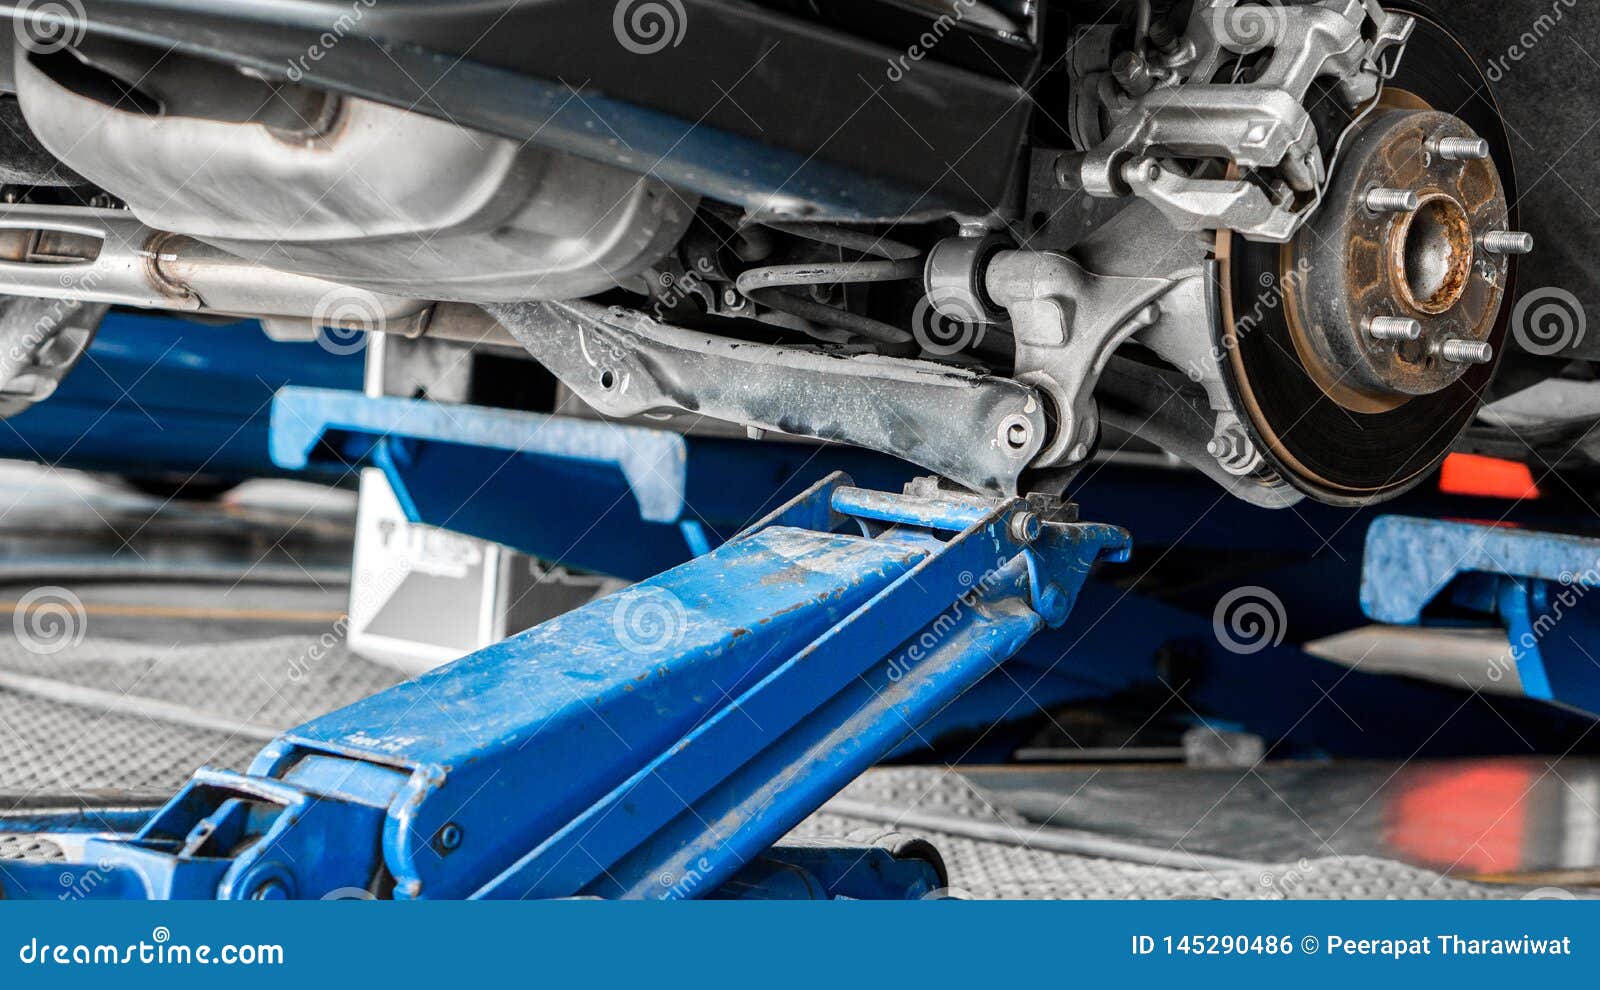 Car Suspension Service With Hydraulic Floor Jack In Maintenance